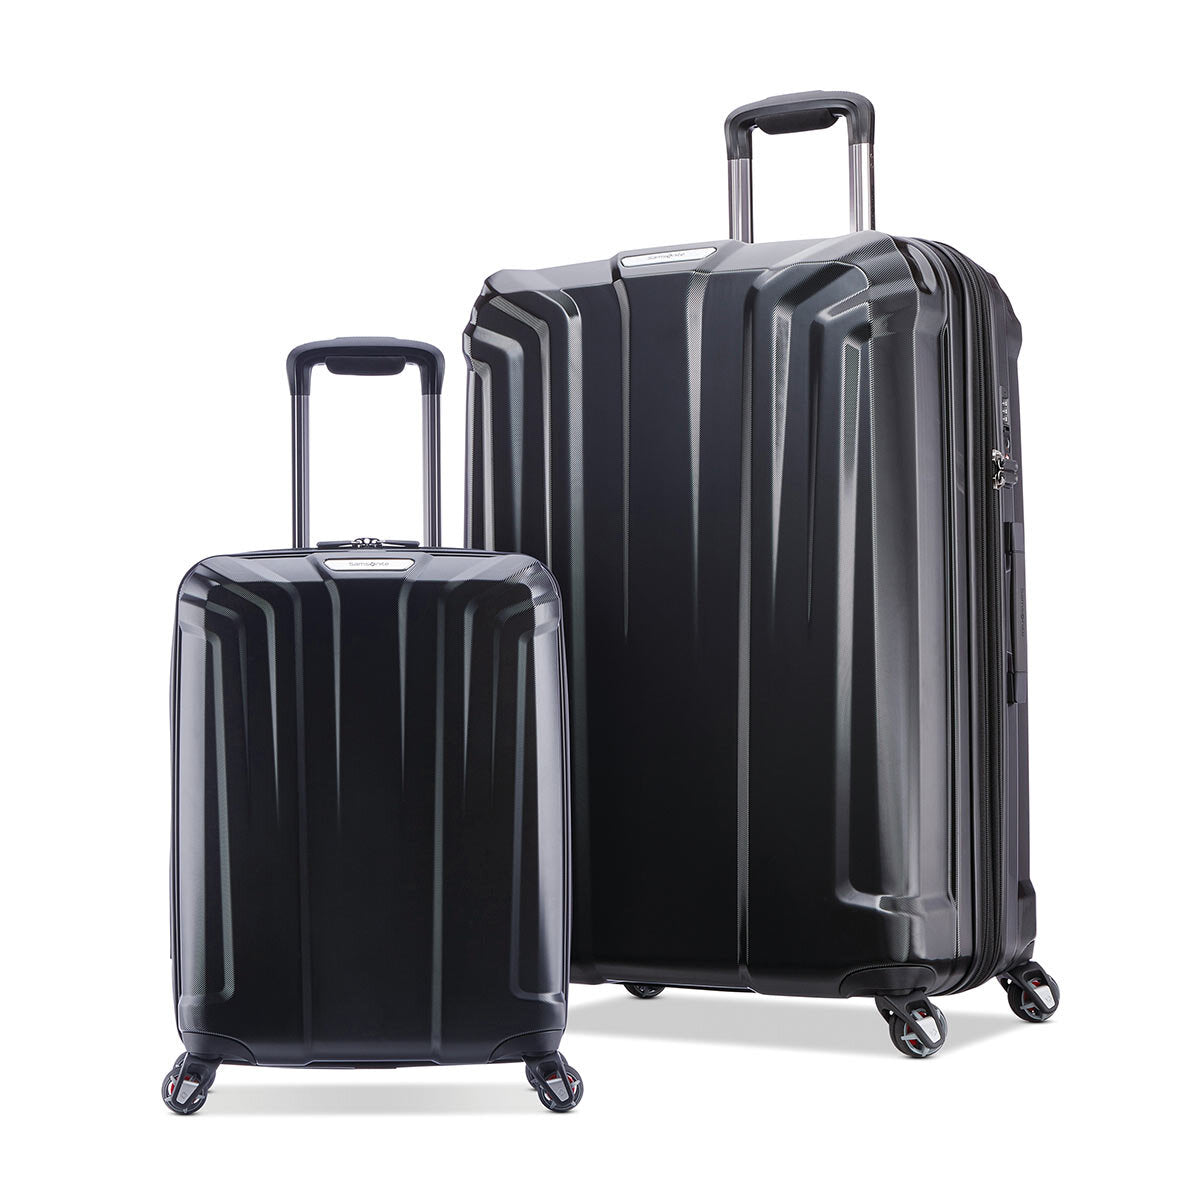 Samsonite Endure 2 Piece Hardside Luggage Set in Black